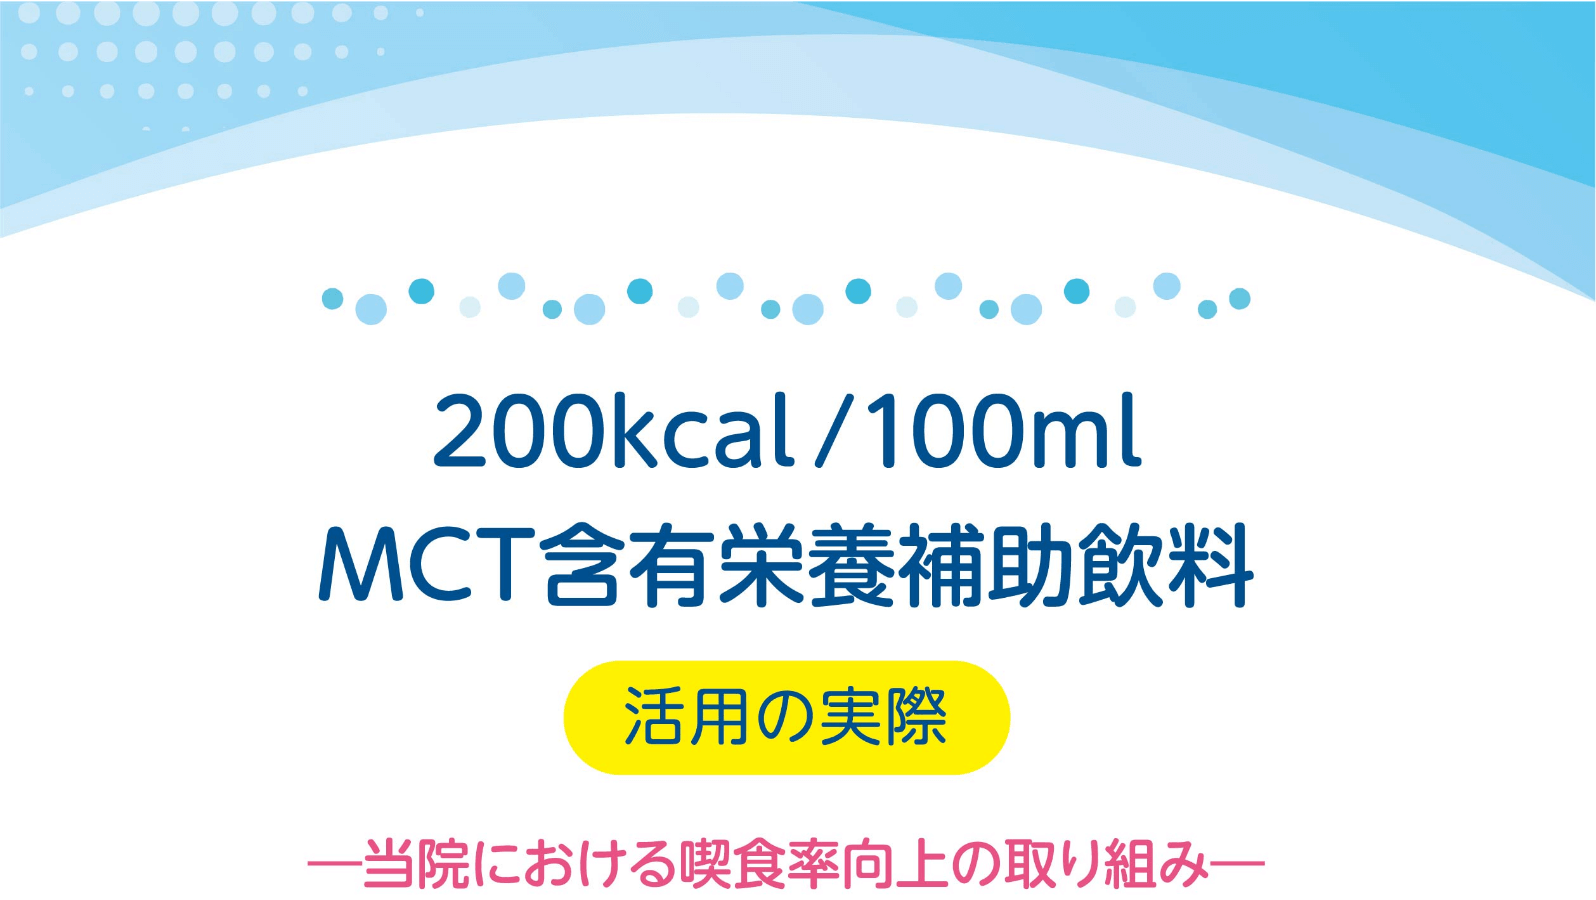 「200kcal/100ml MCT含有栄養補助飲料」活用の実際